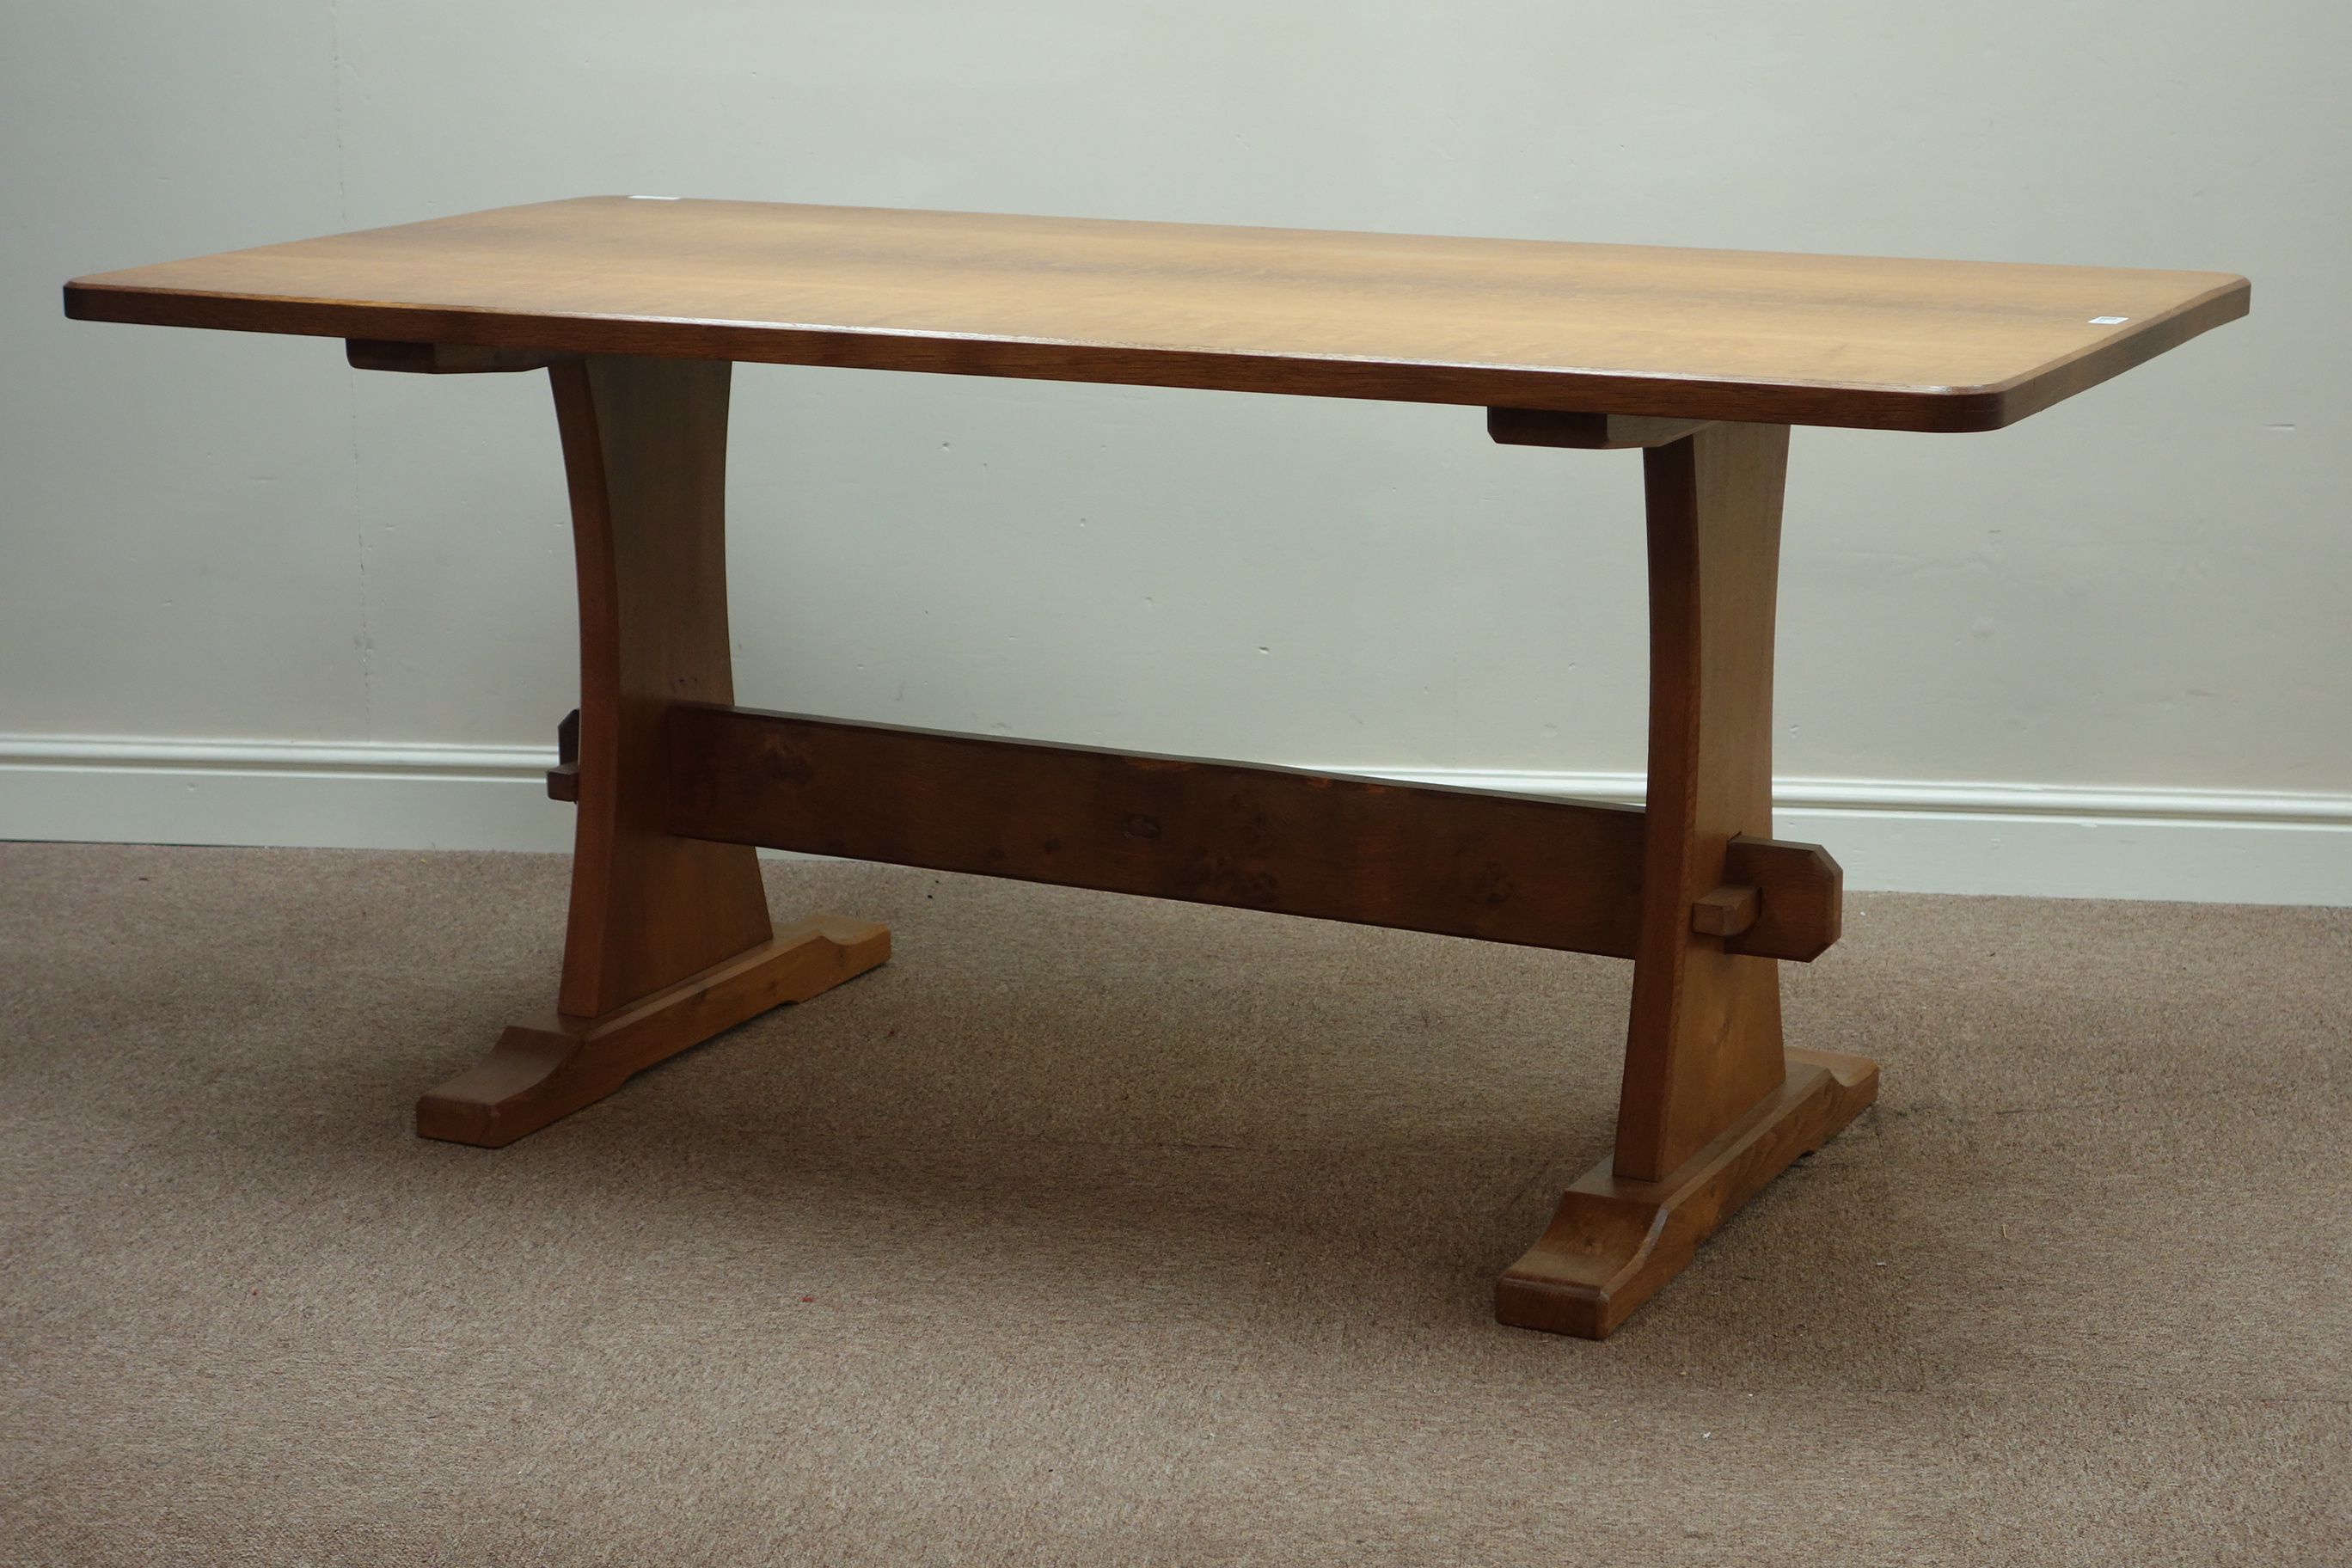 'Acornman' adzed oak rectangular refectory dining table, stretcher base, W167, D80cm,